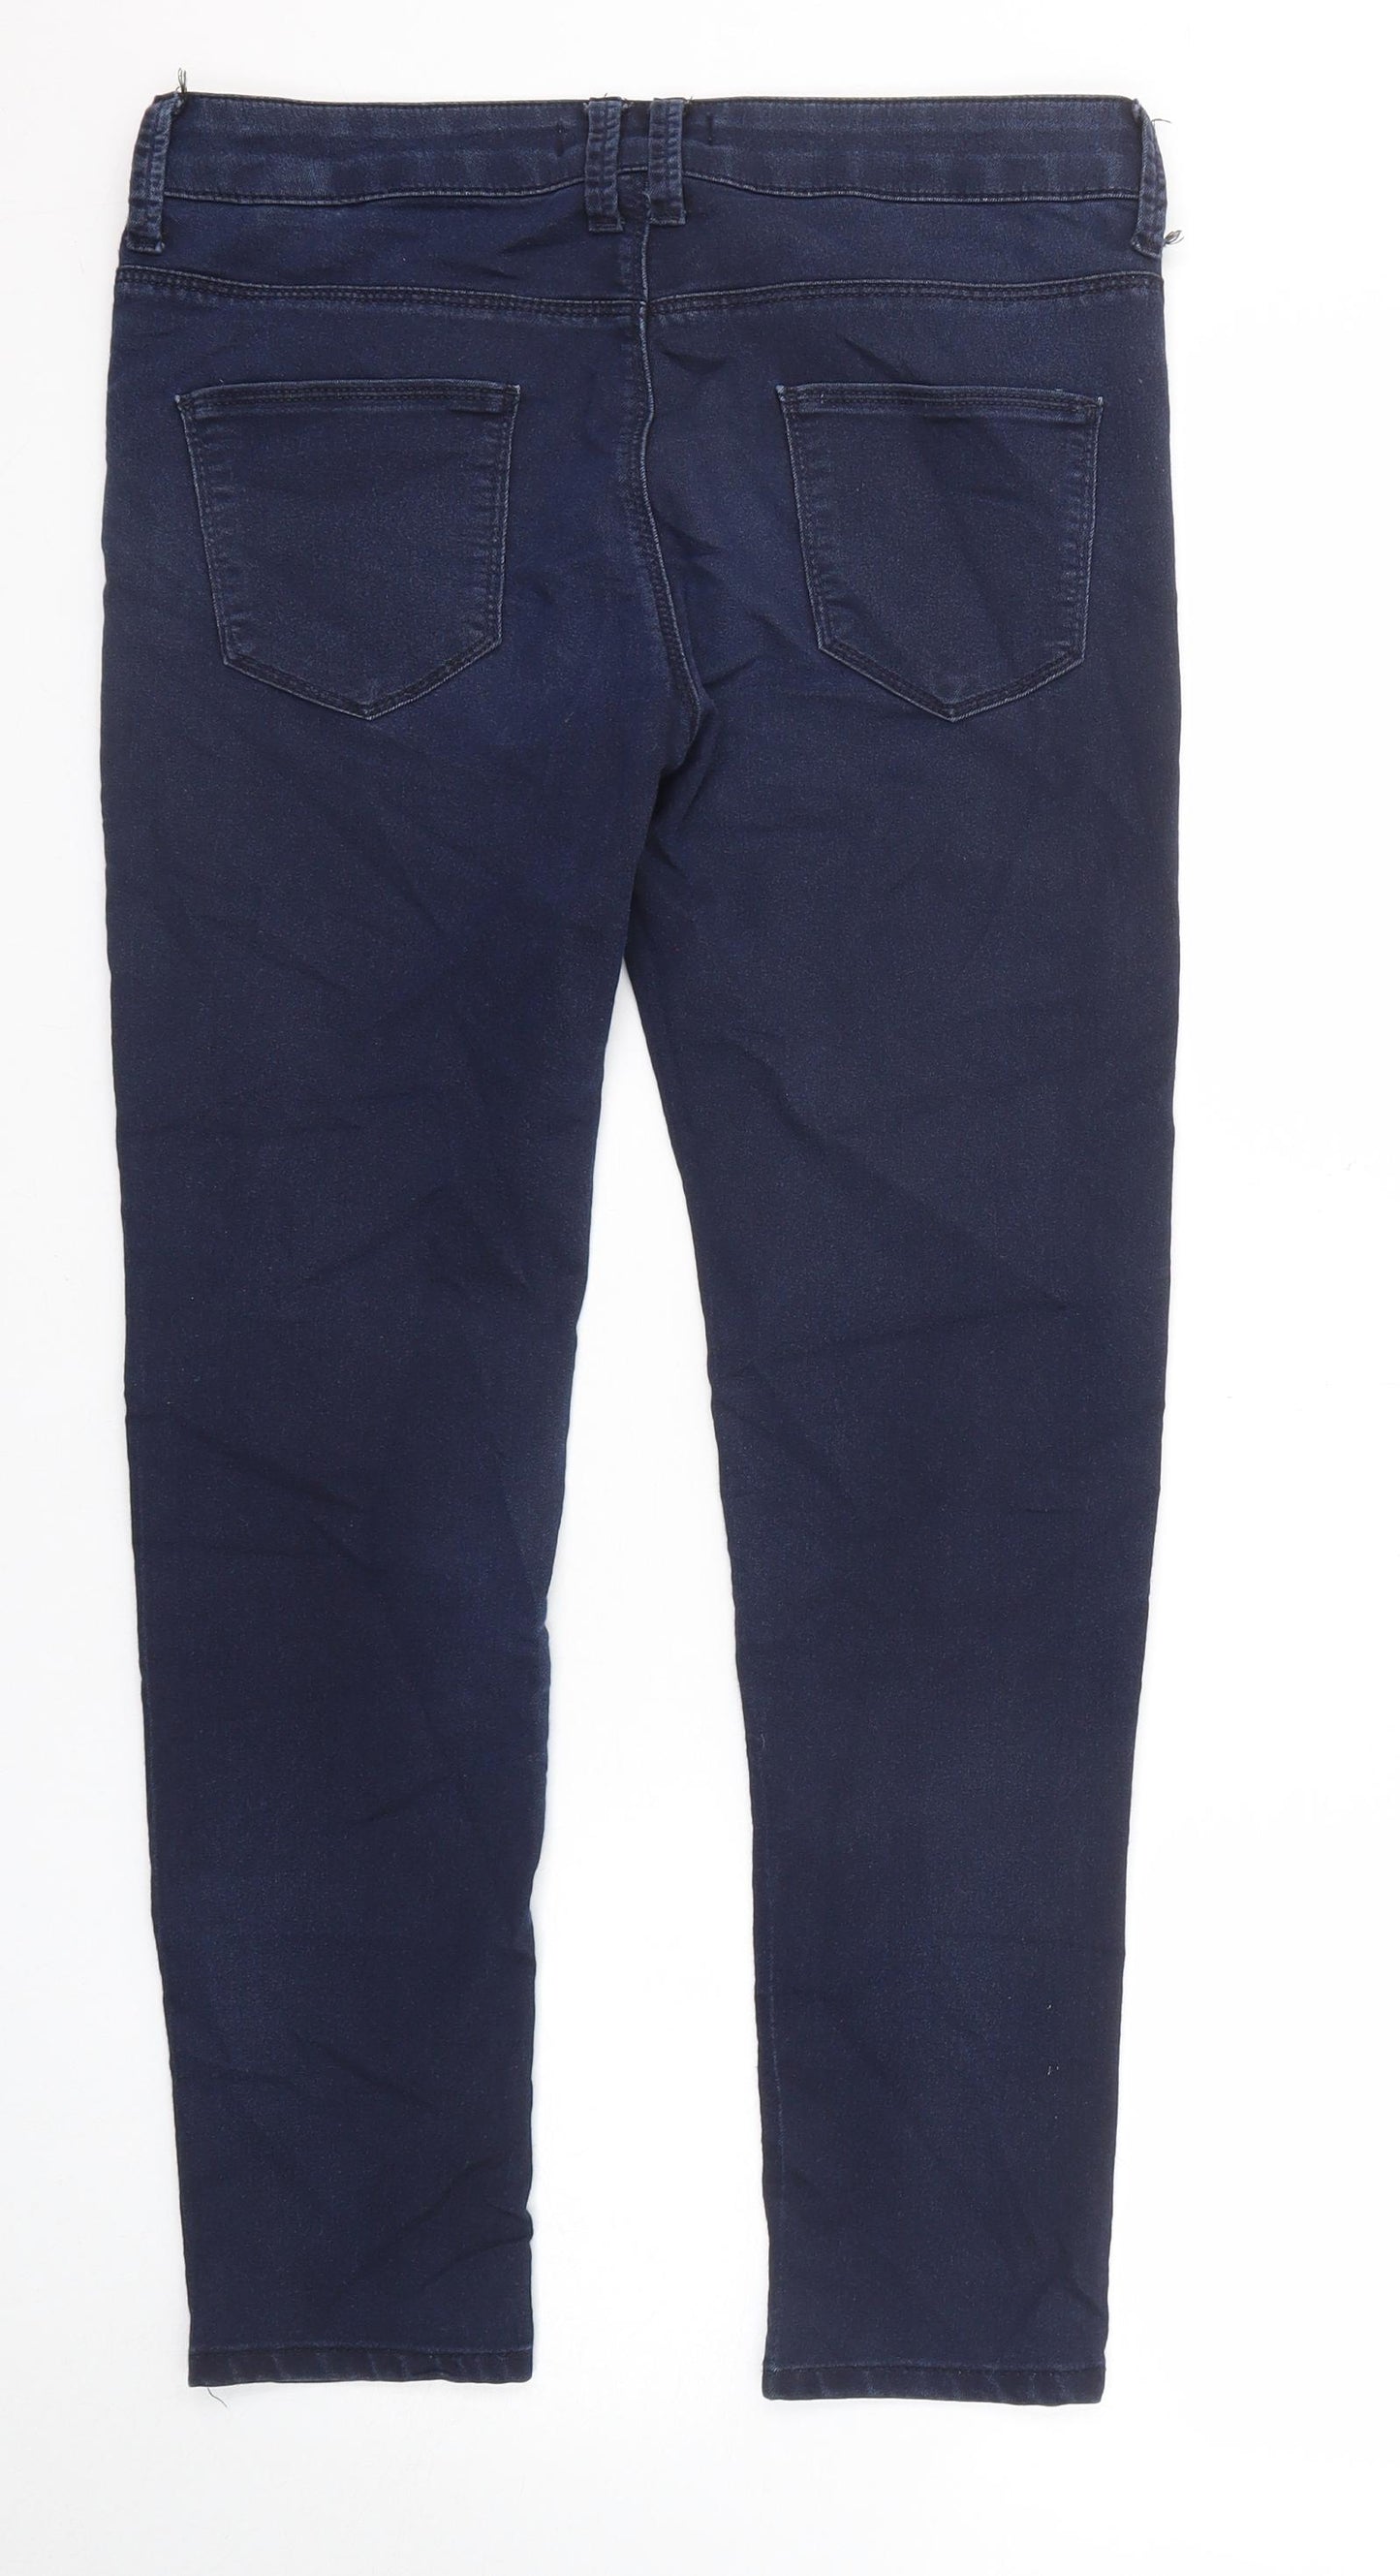 Marks and Spencer Womens Blue Cotton Skinny Jeans Size 10 Regular Zip - Short Leg